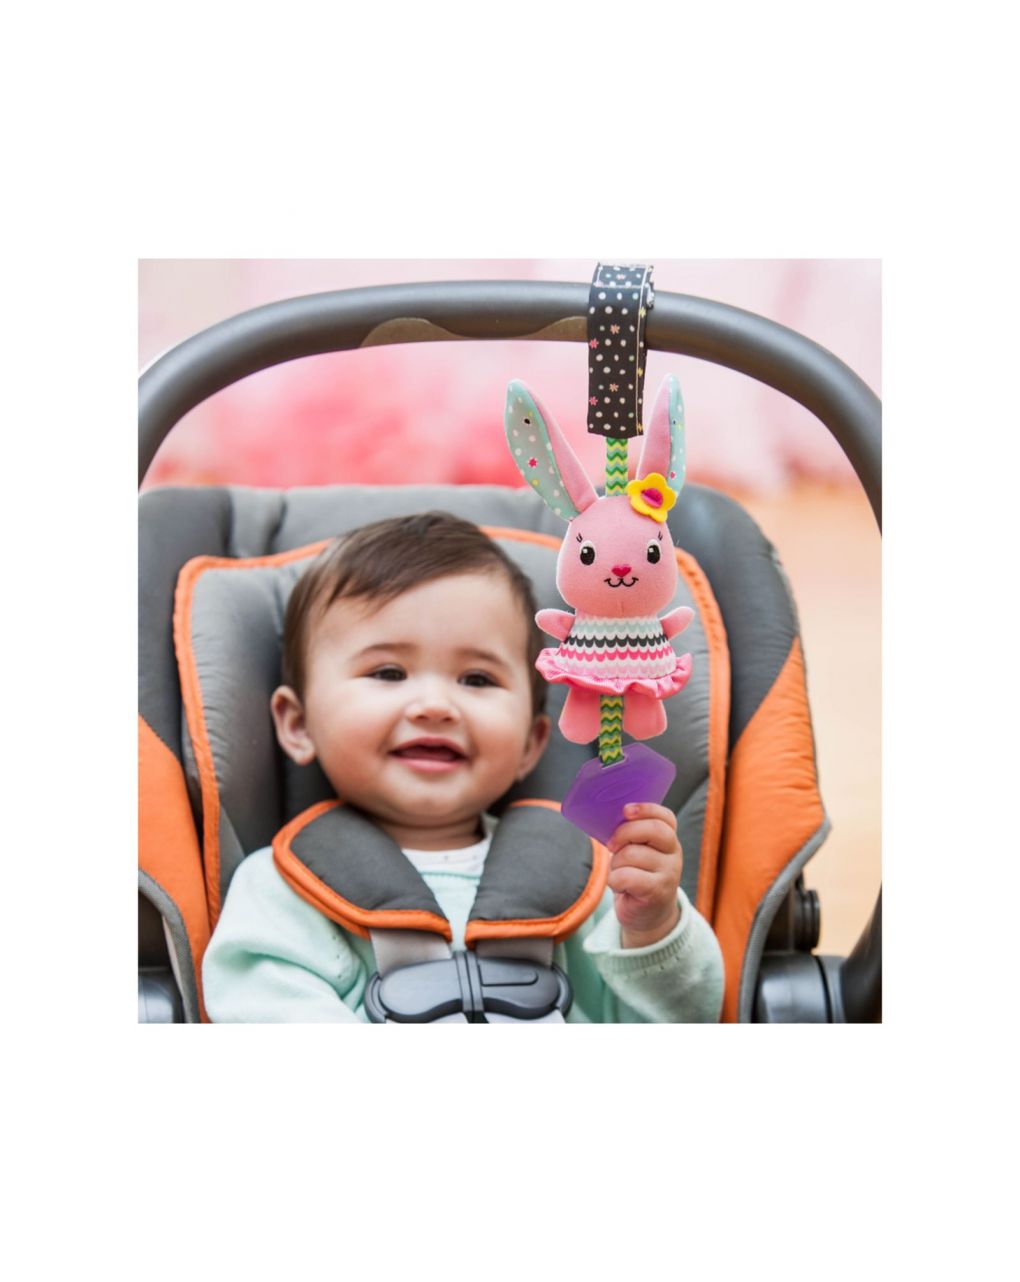 Infantino - accesorio de gimnasia - conejito - INFANTINO